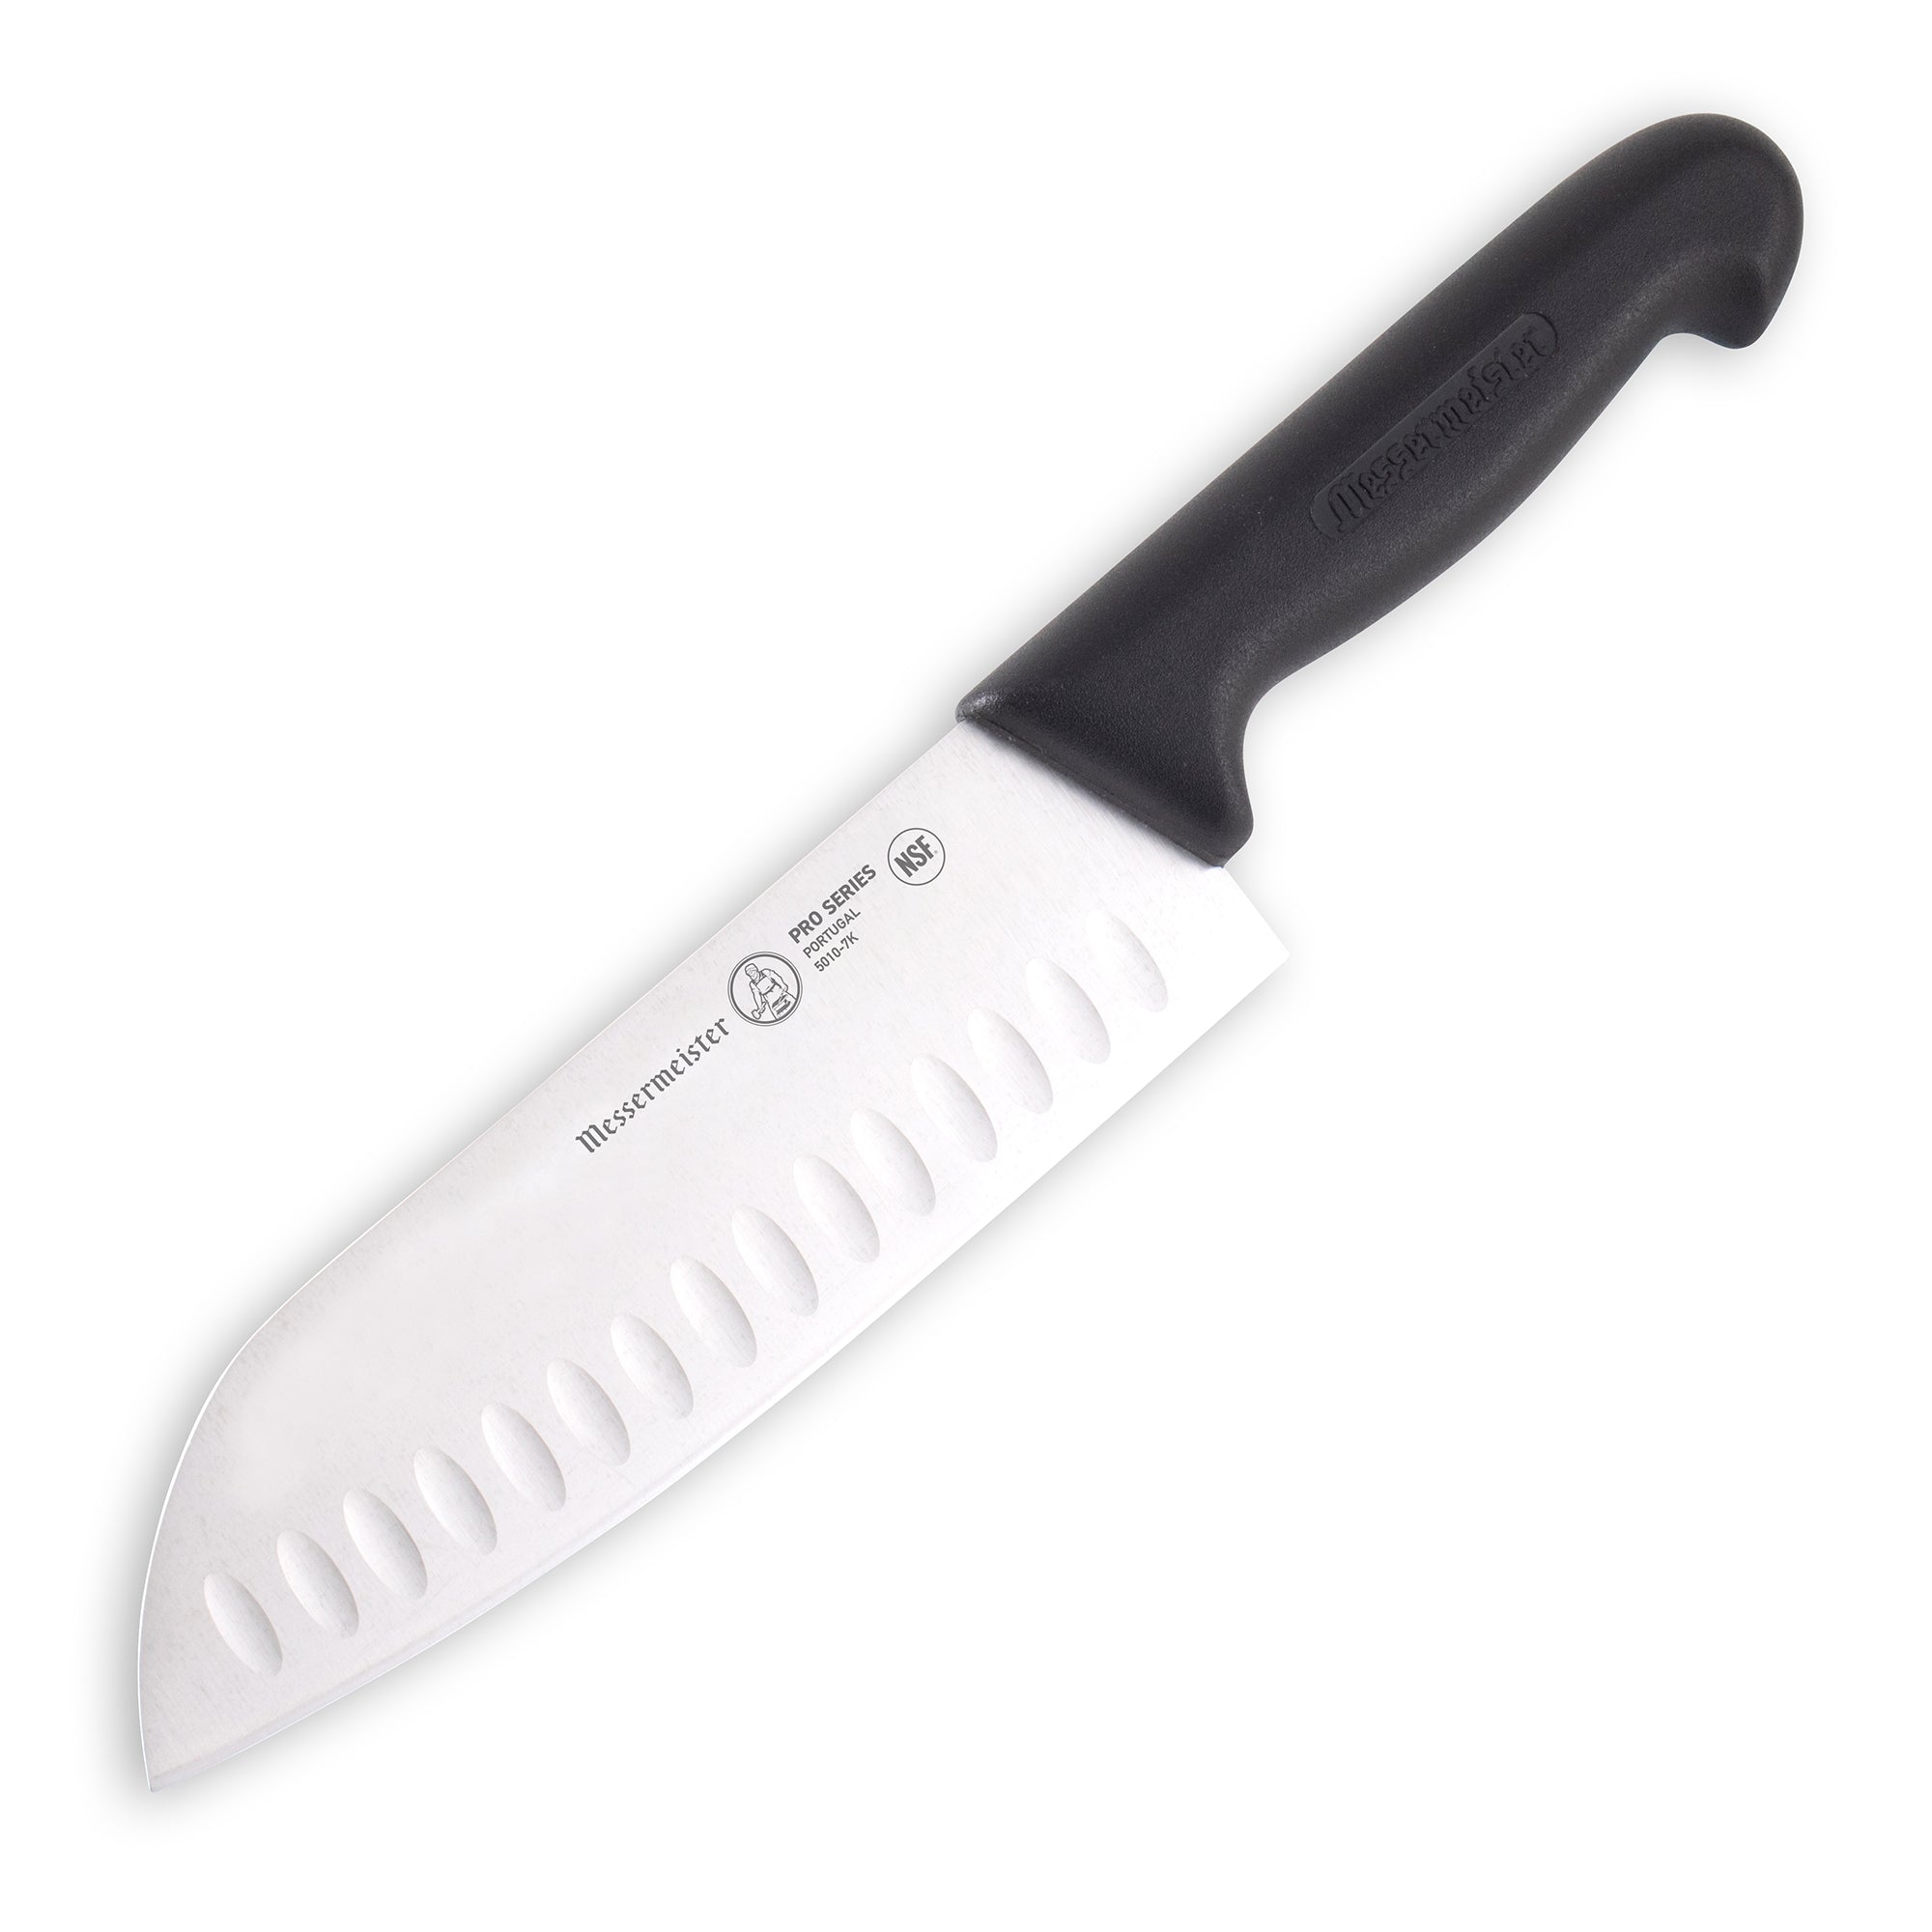 Messermeister Petite Stainless Steel Messer Kullenschliff Santoku Knife, 5 inch, Orange